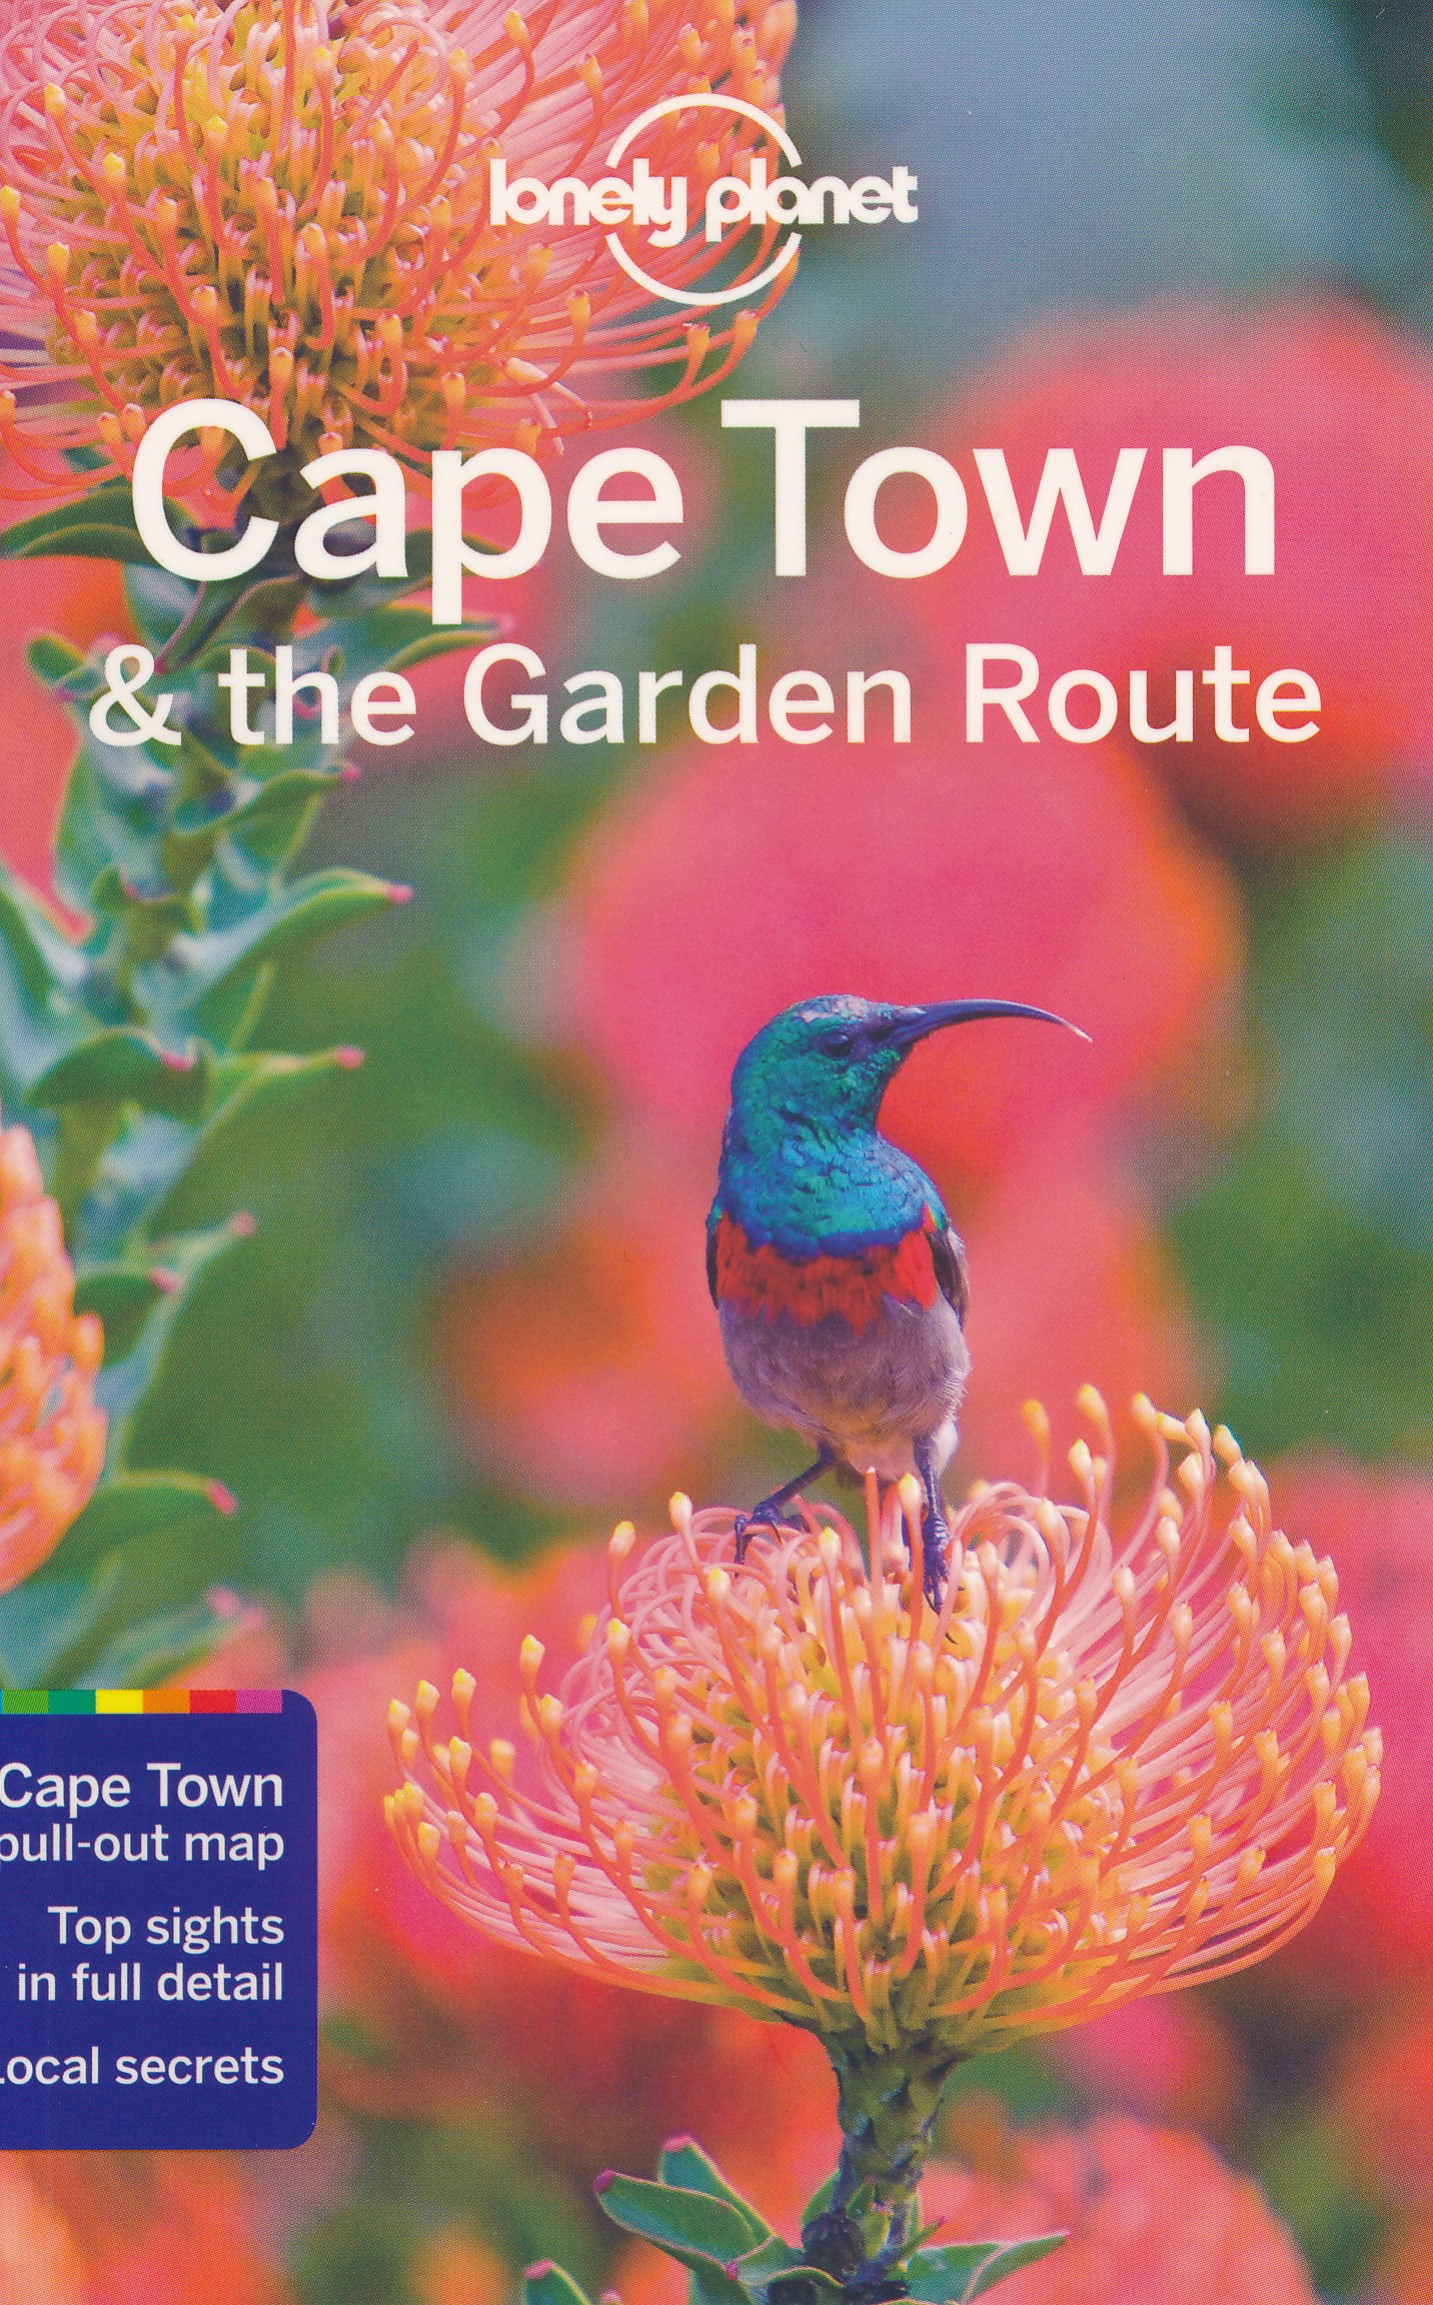 Online bestellen: Reisgids Cape Town & Garden Route - Kaapstad | Lonely Planet